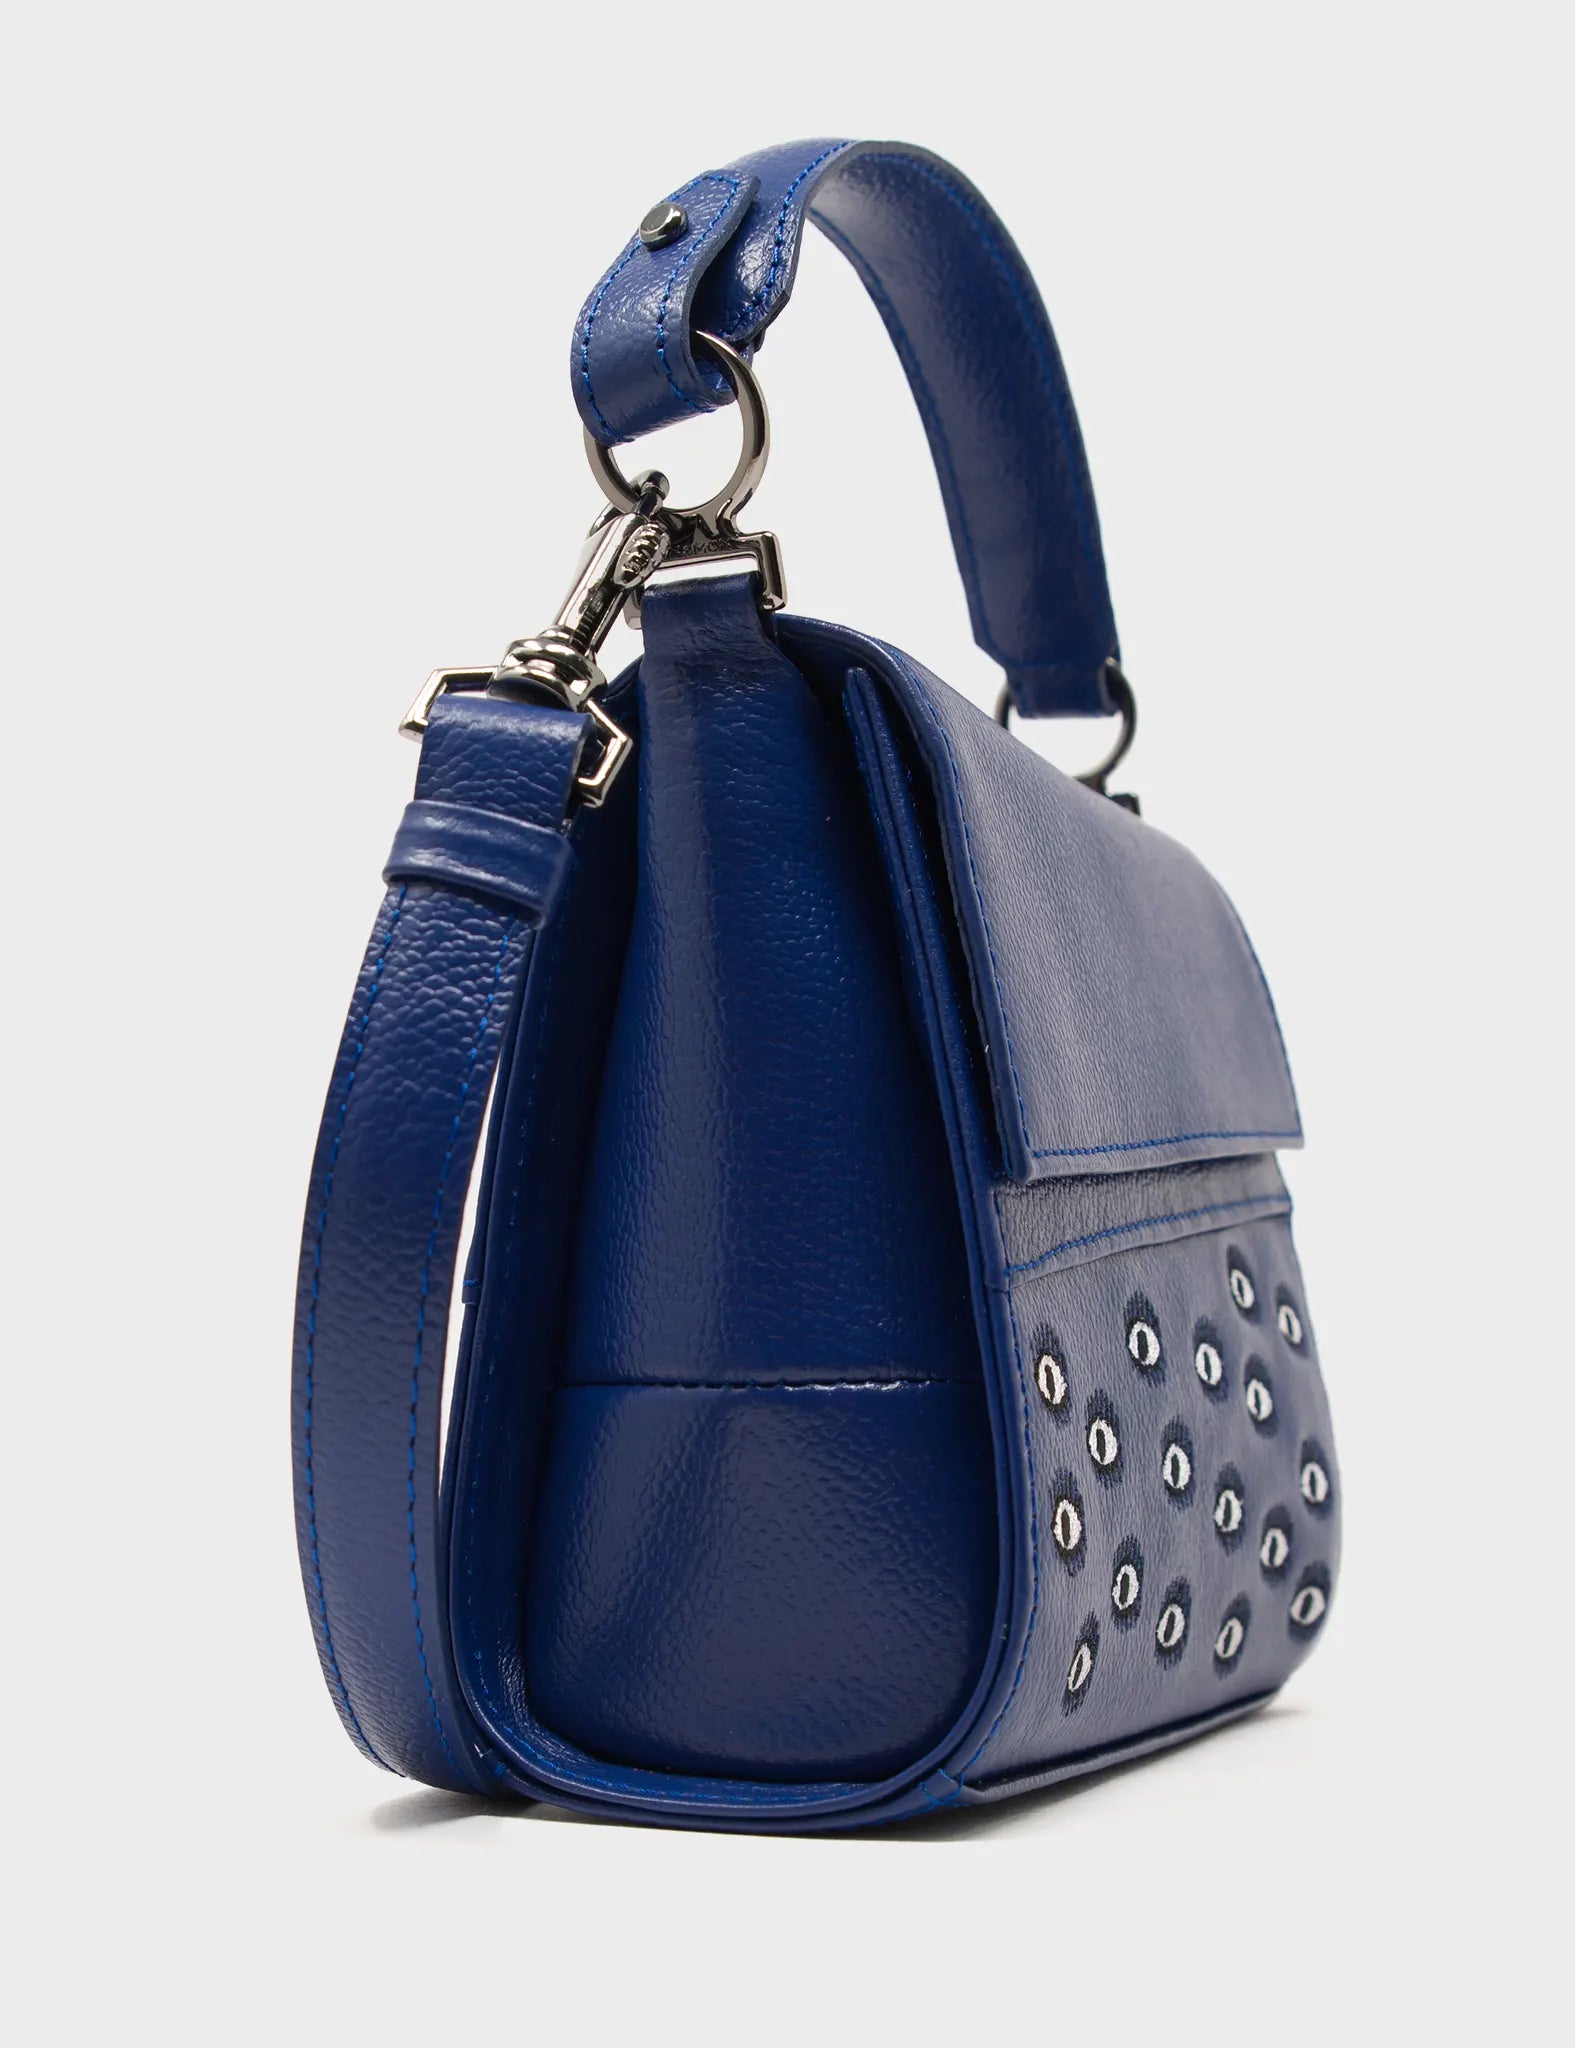 Micro Crossbody Handbag Royal Blue Leather - Eyes Embroidery - Side